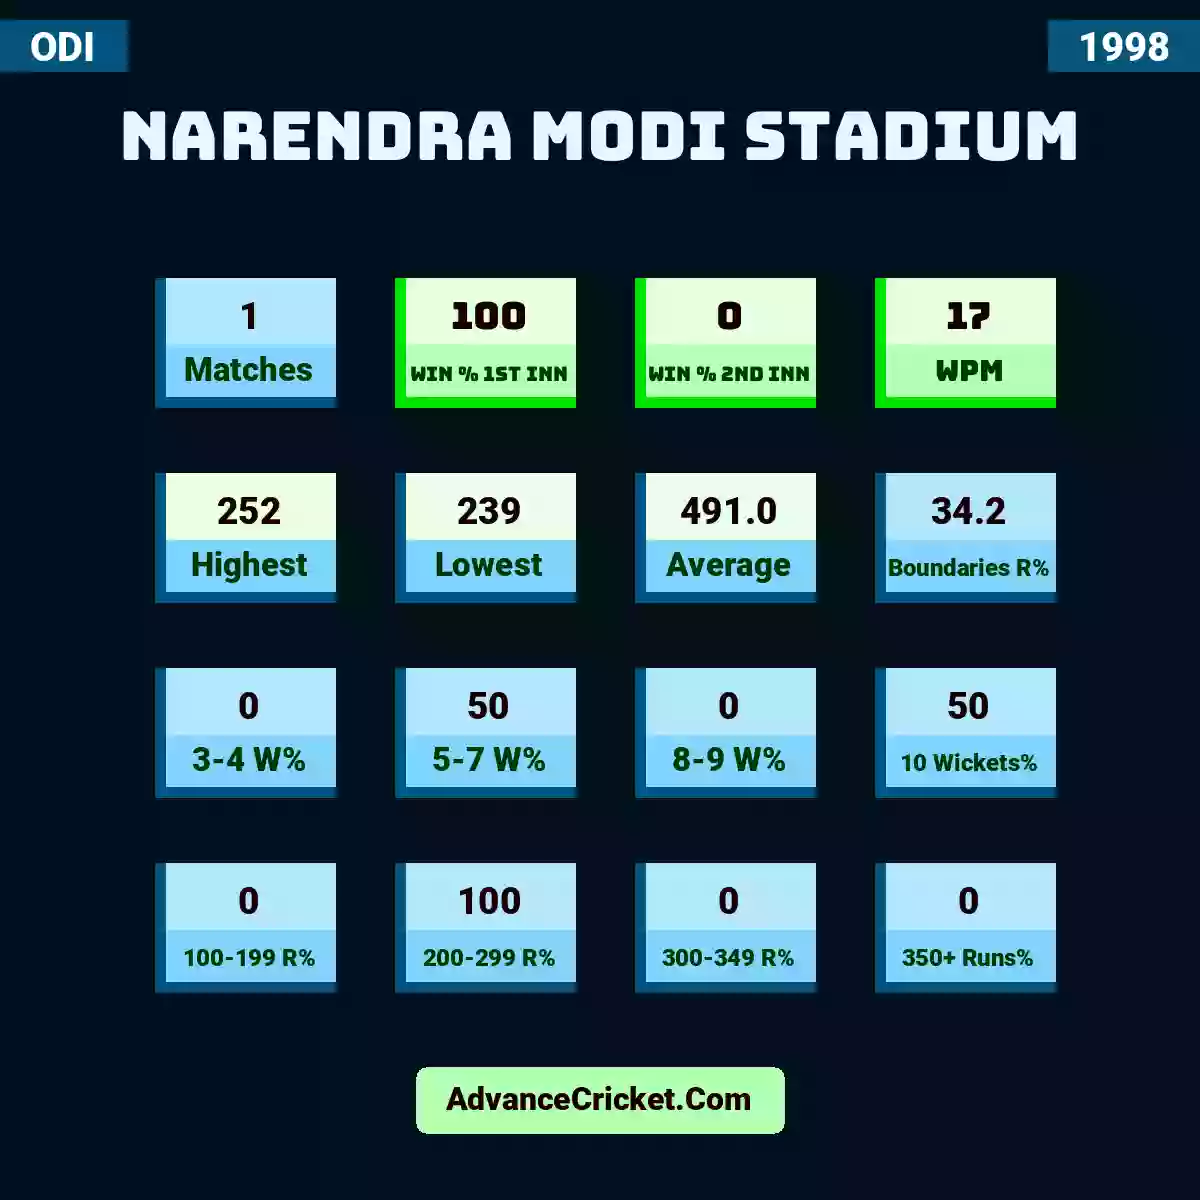 Image showing Narendra Modi Stadium with Matches: 1, Win % 1st Inn: 100, Win % 2nd Inn: 0, WPM: 17, Highest: 252, Lowest: 239, Average: 491.0, Boundaries R%: 34.2, 3-4 W%: 0, 5-7 W%: 50, 8-9 W%: 0, 10 Wickets%: 50, 100-199 R%: 0, 200-299 R%: 100, 300-349 R%: 0, 350+ Runs%: 0.